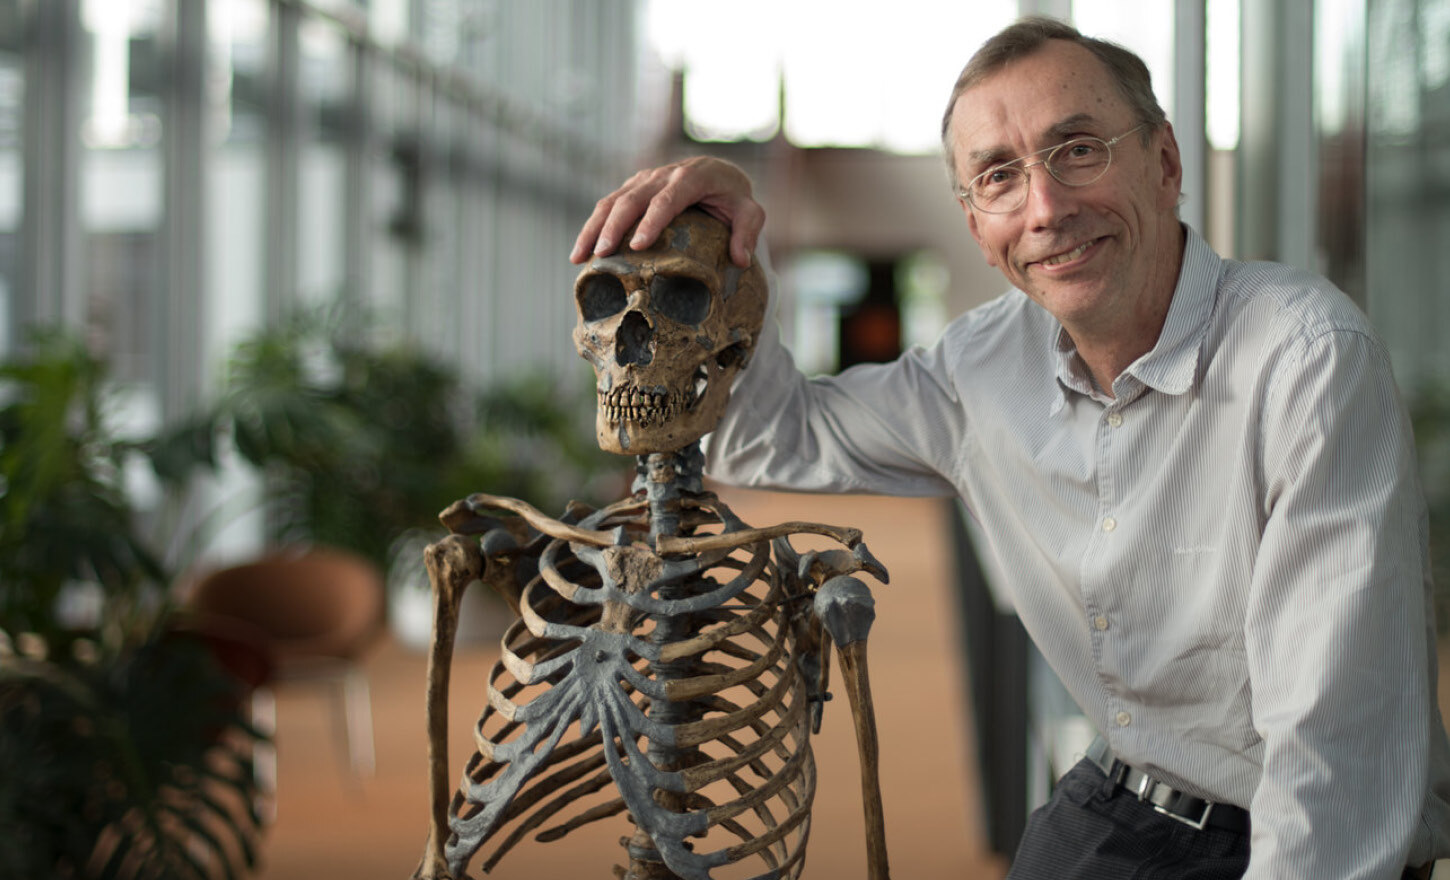 Nobelpreisträger Pääbo mit einem Skelett